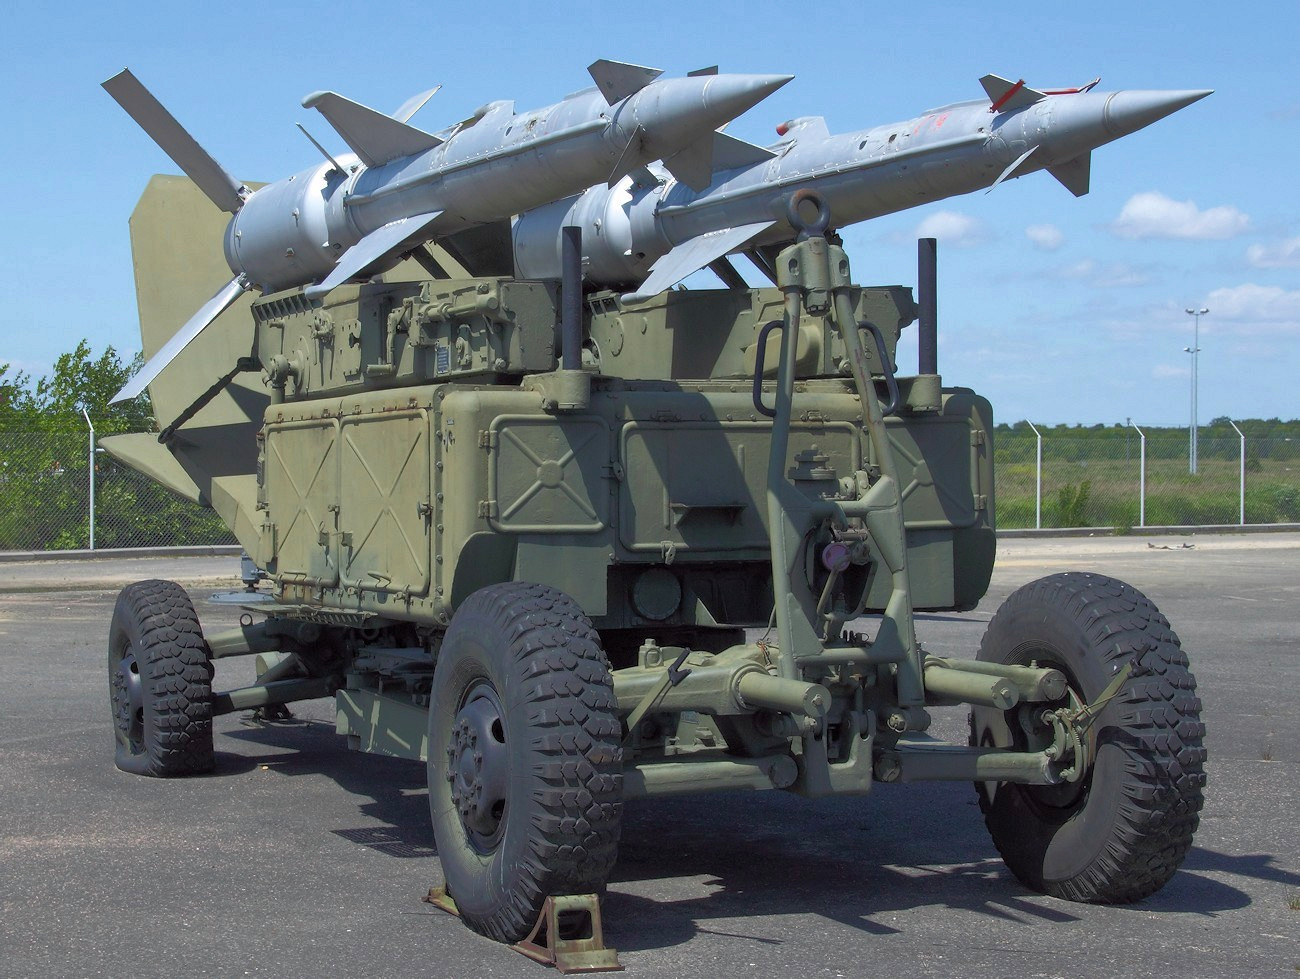 S-125 Newa - UdSSR Flugabwehrraketensystem